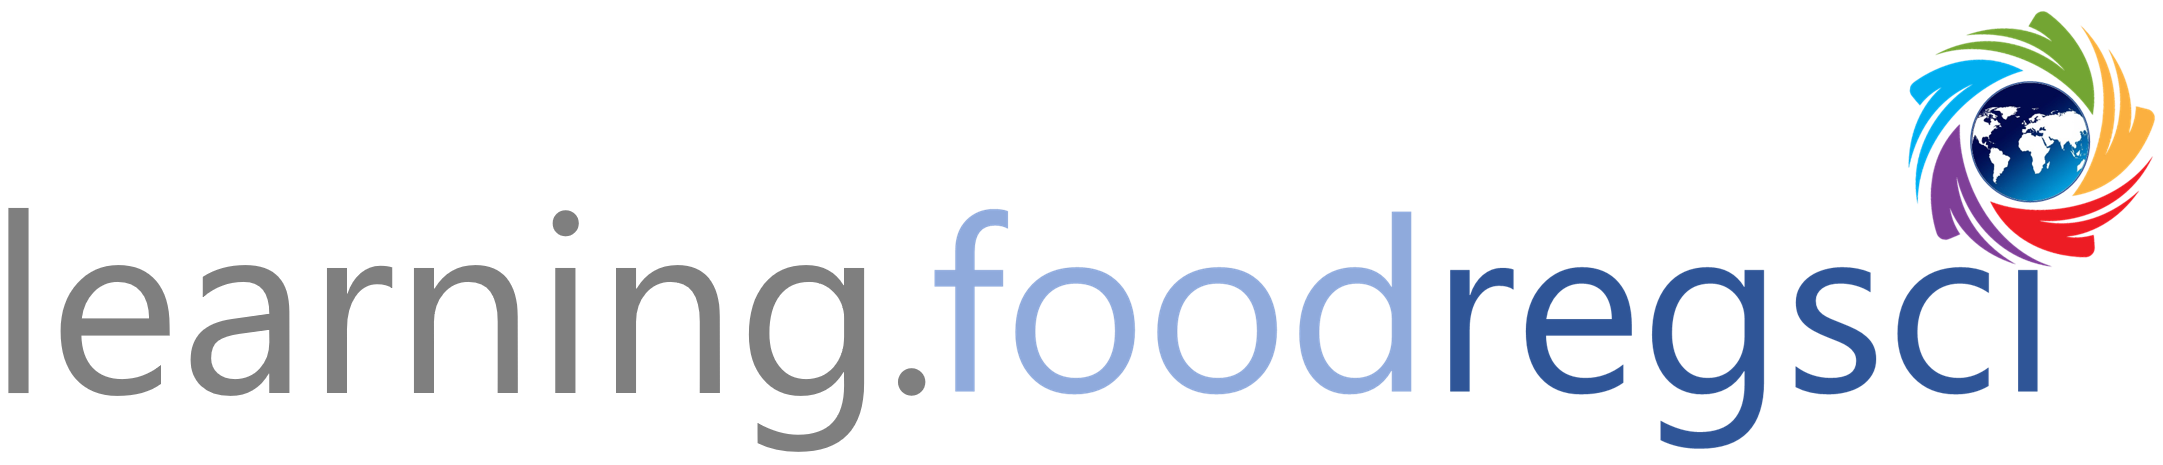 foodregsci Learning Platform